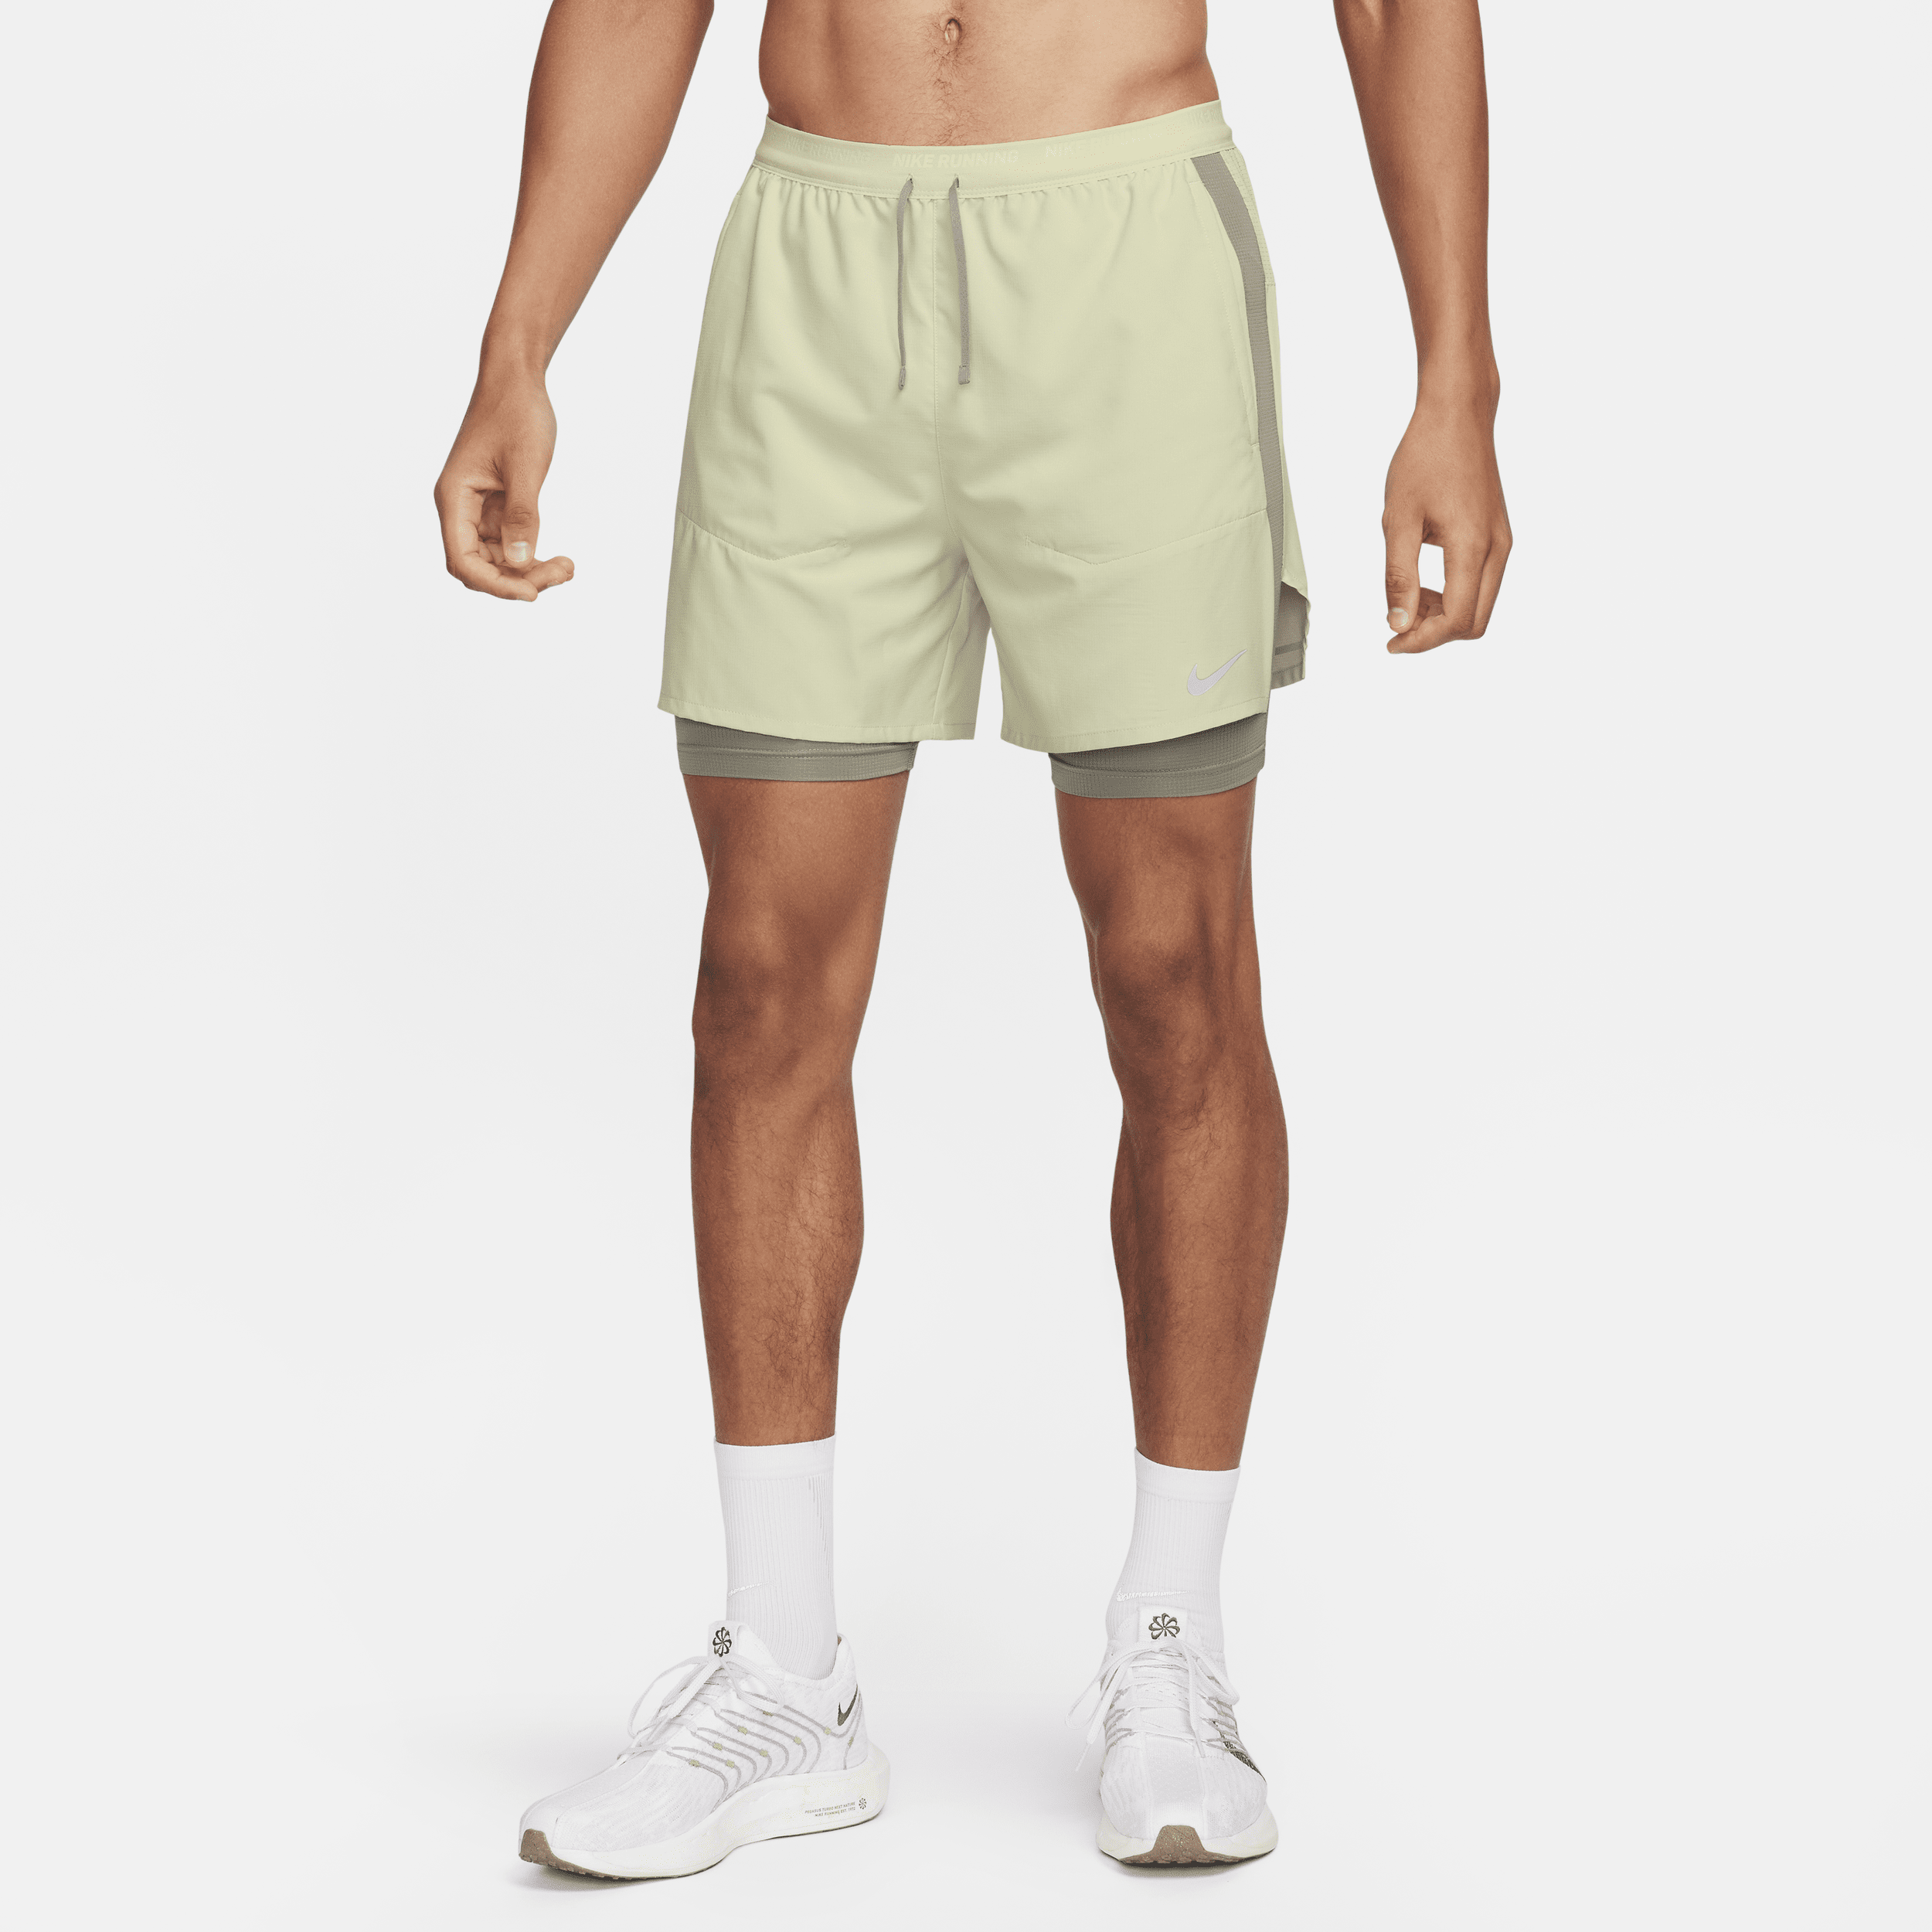 Shorts da running Hybrid 13 cm Dri-FIT Nike Stride – Uomo - Verde